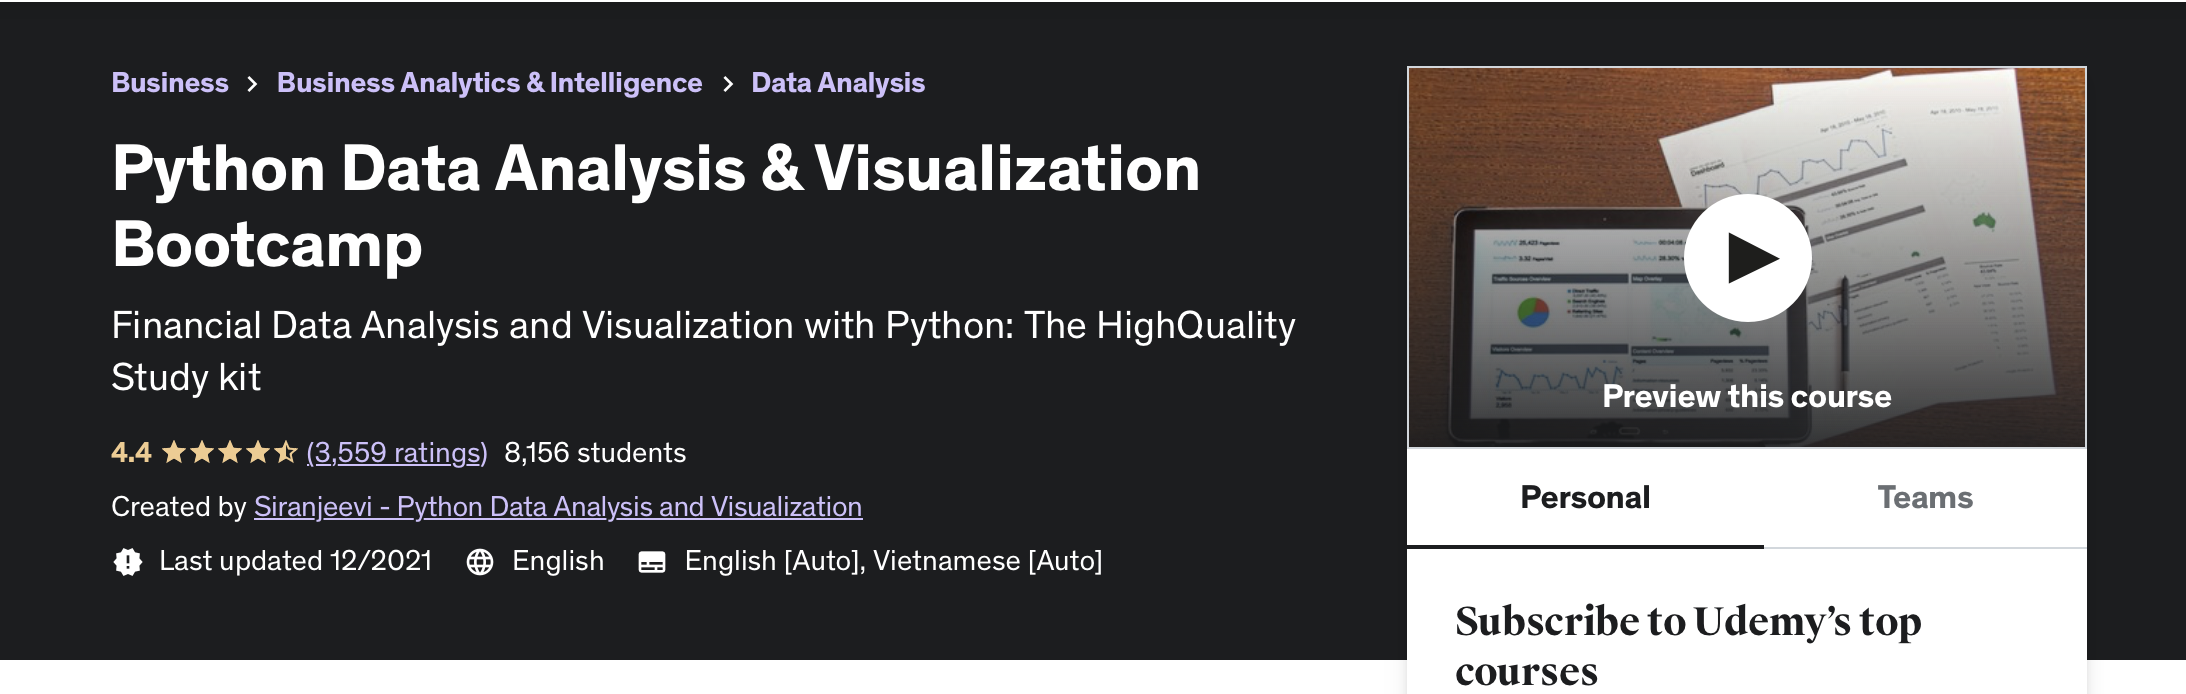 Python Data Analysis and Visualization Bootcamp